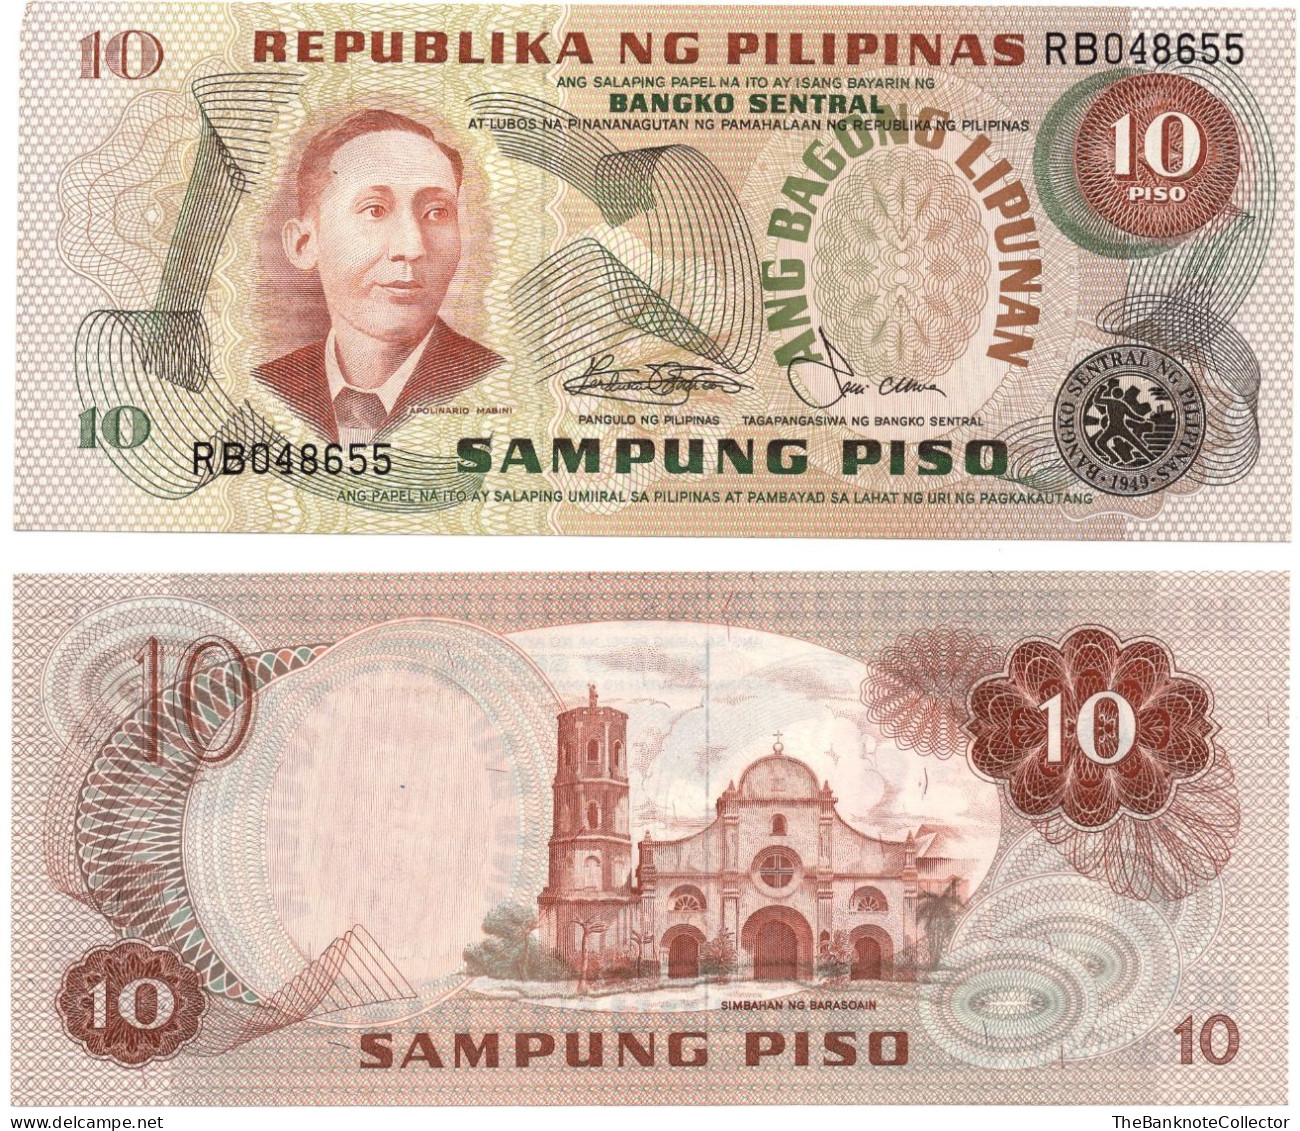 Philippines 10 Peso ND1970  P-154 UNC - Philippines